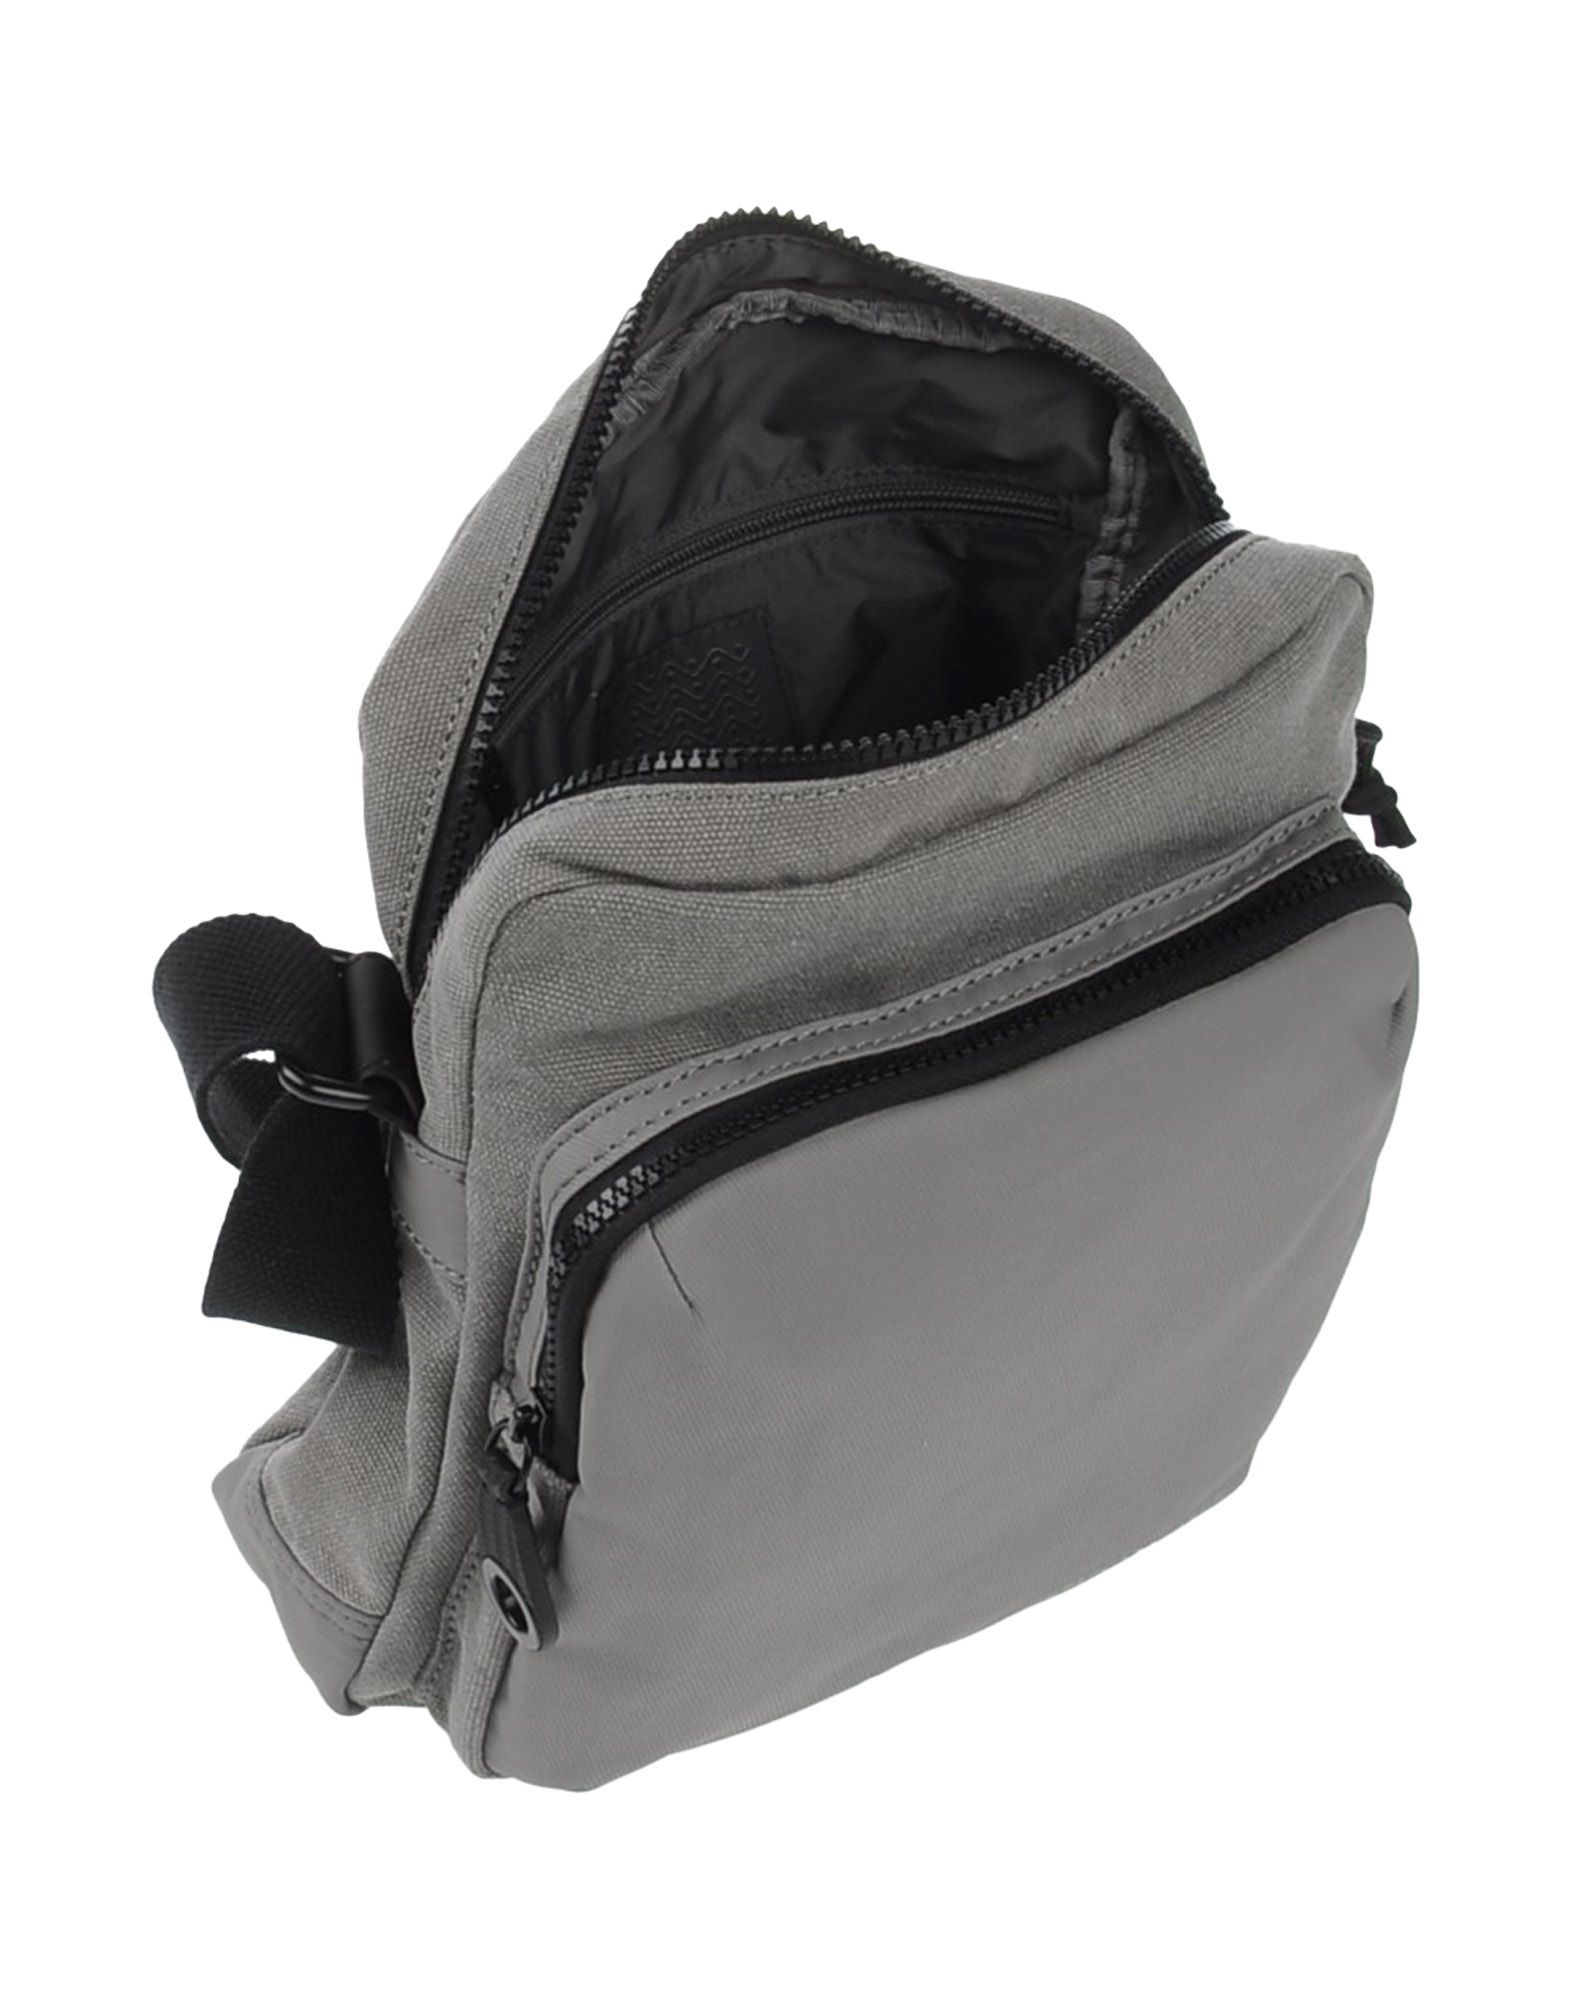 Geox Canvas Cross-body Bag in Light Grey (Gray) for Men - Lyst